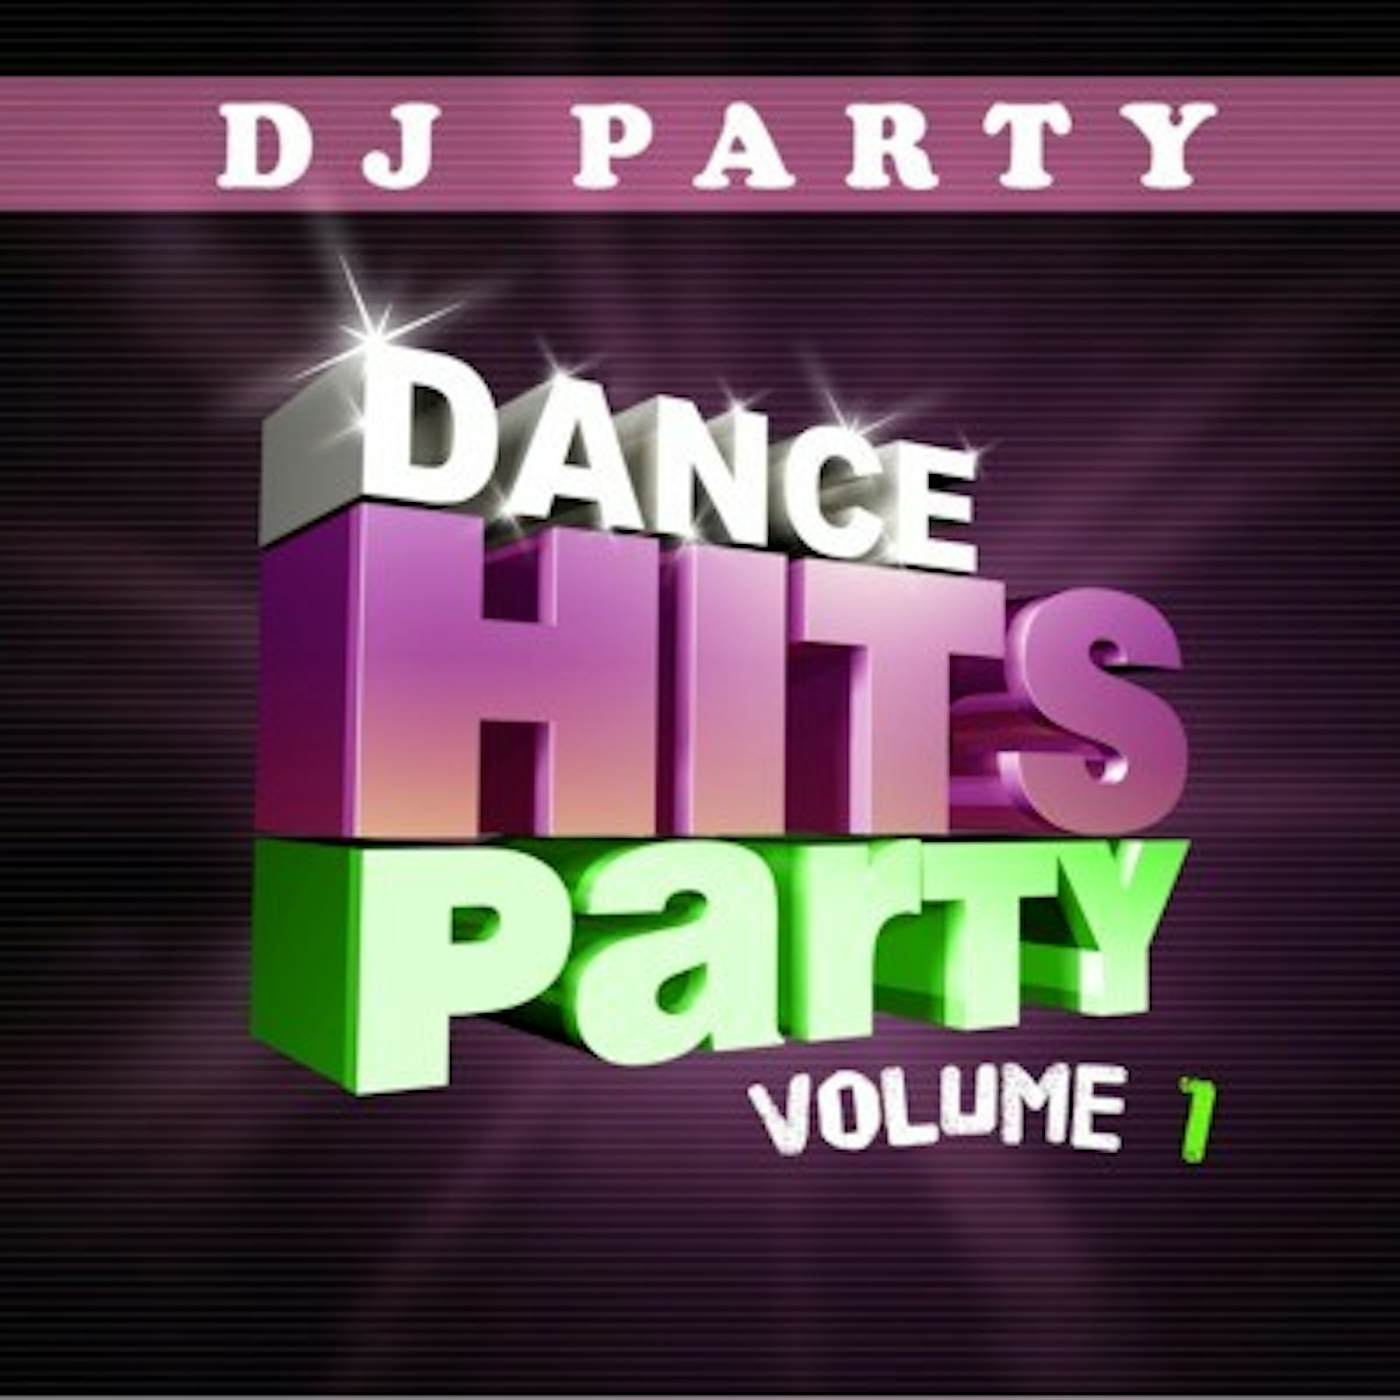 DJ Party DANCE HITS PARTY VOL. 1 CD